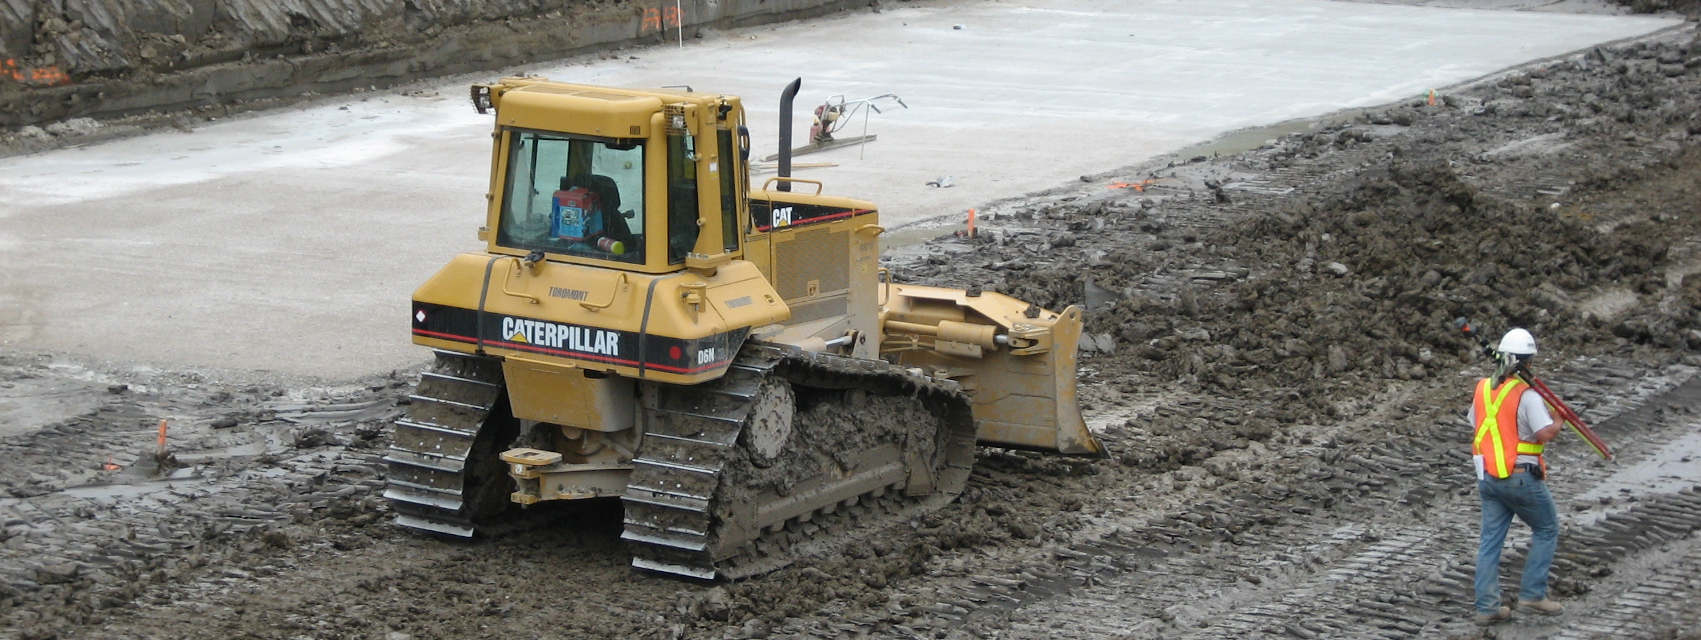 bulldozer in construction area